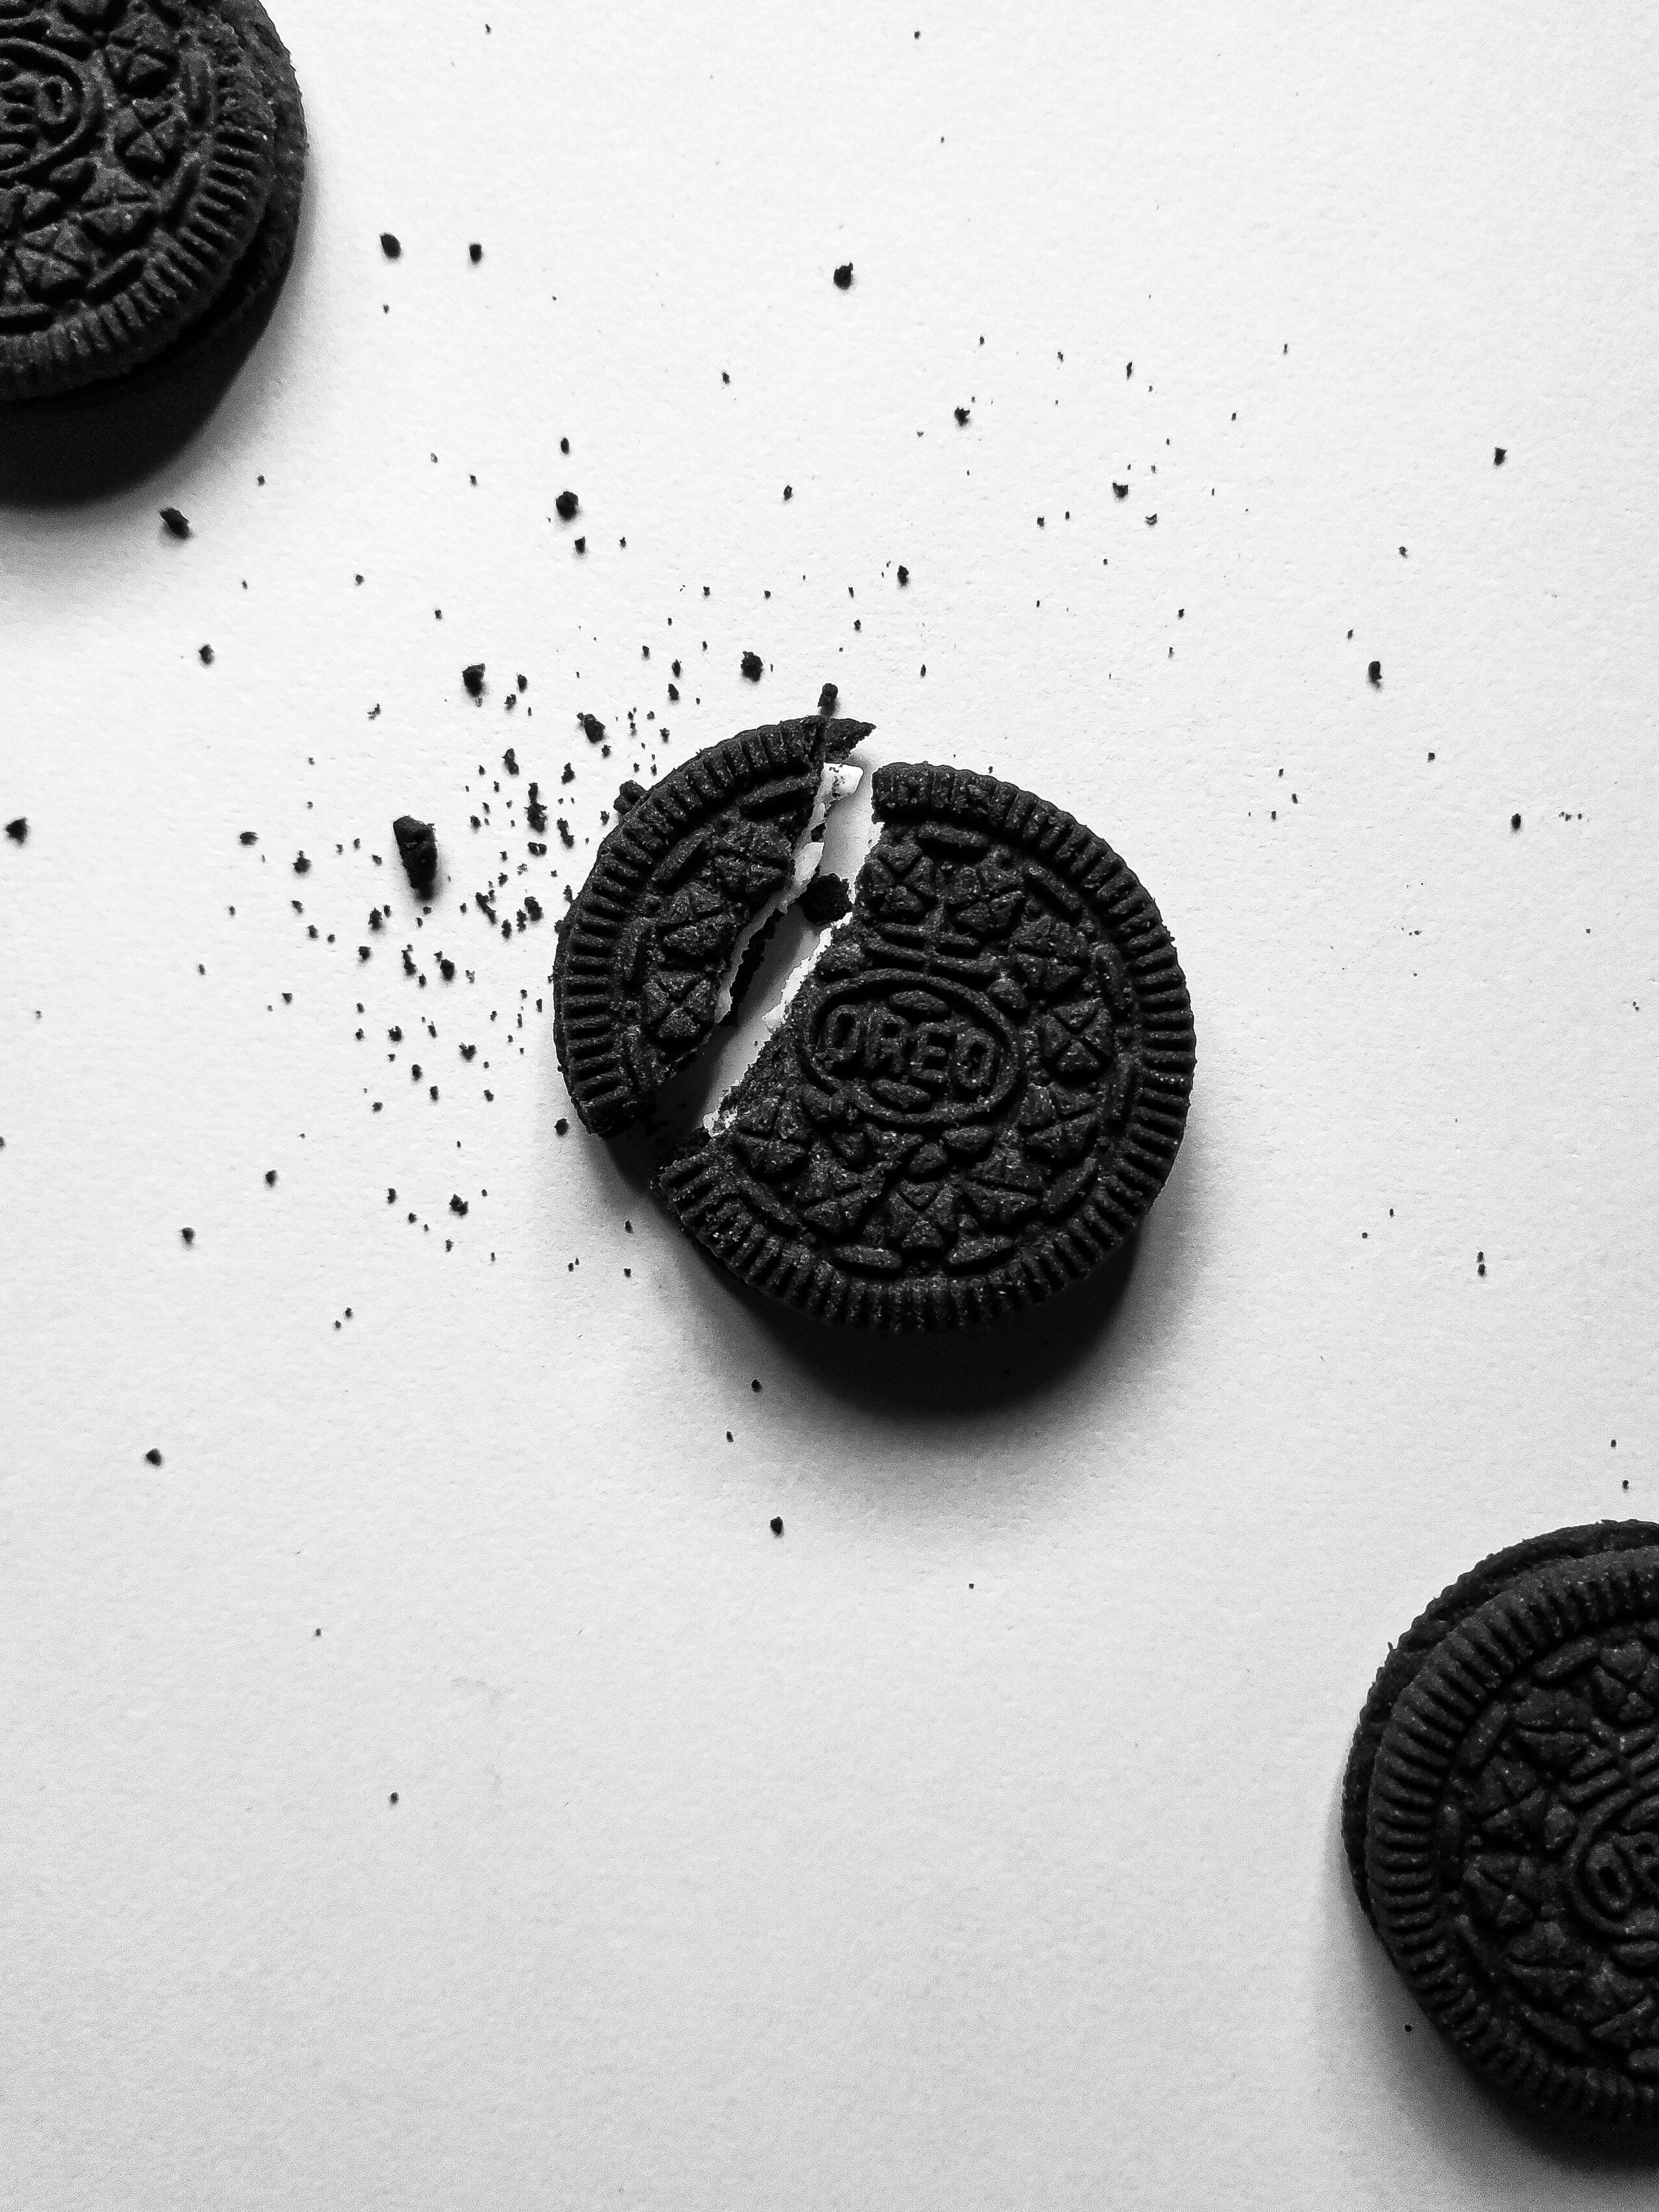 A black and white image of oreo cookies - Oreo